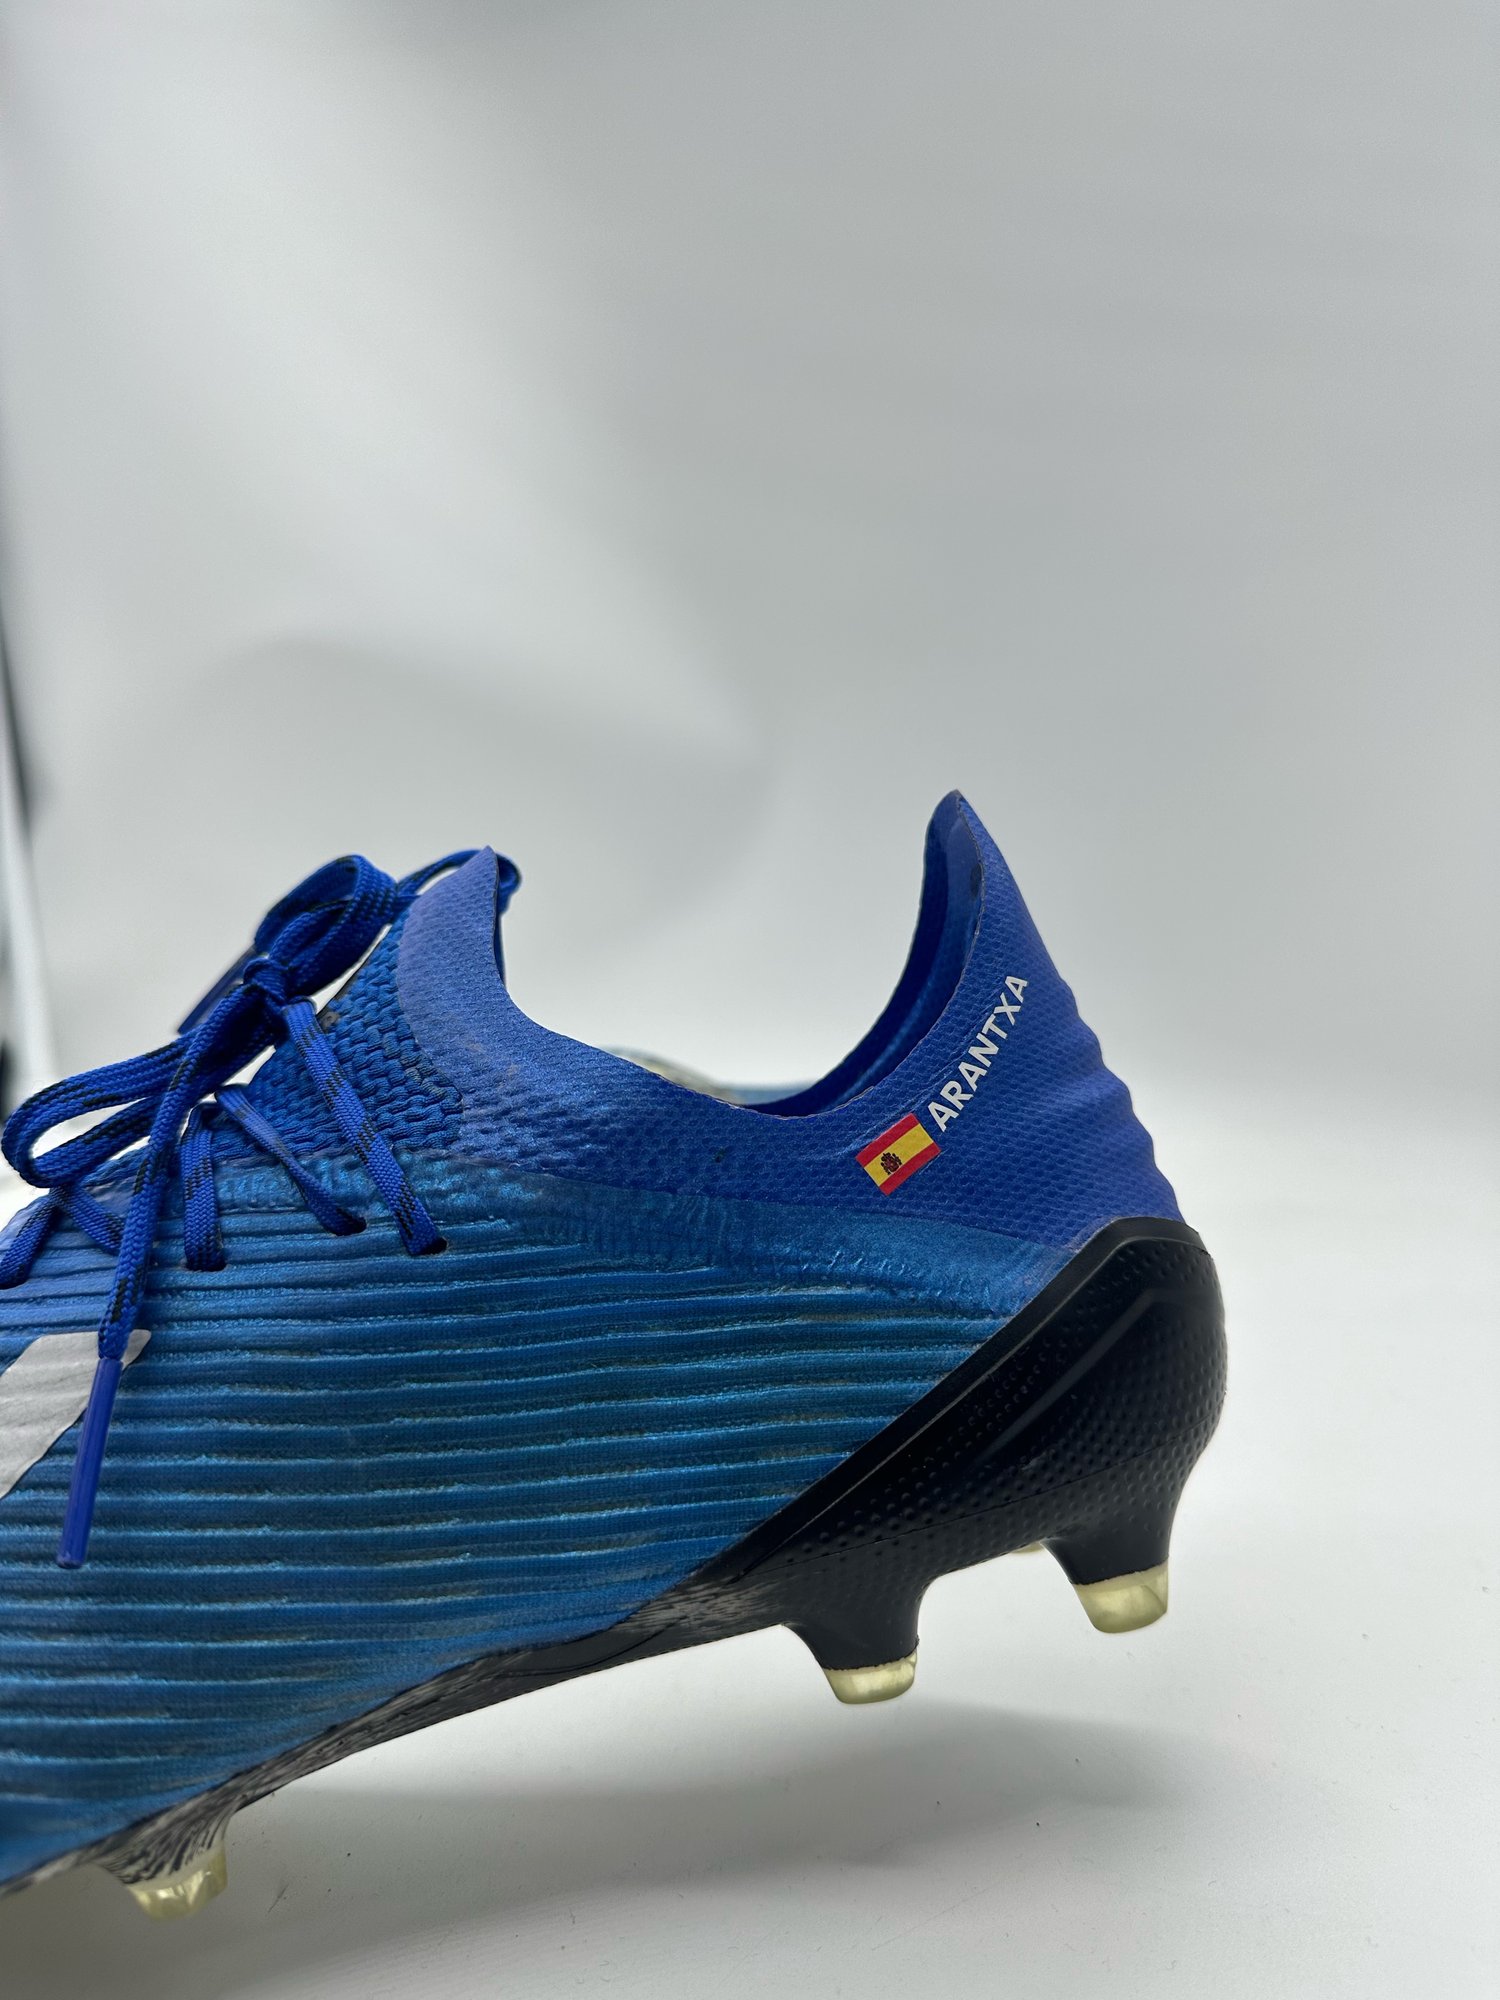 Image of Adidas 19.1 FG Blue Torres 